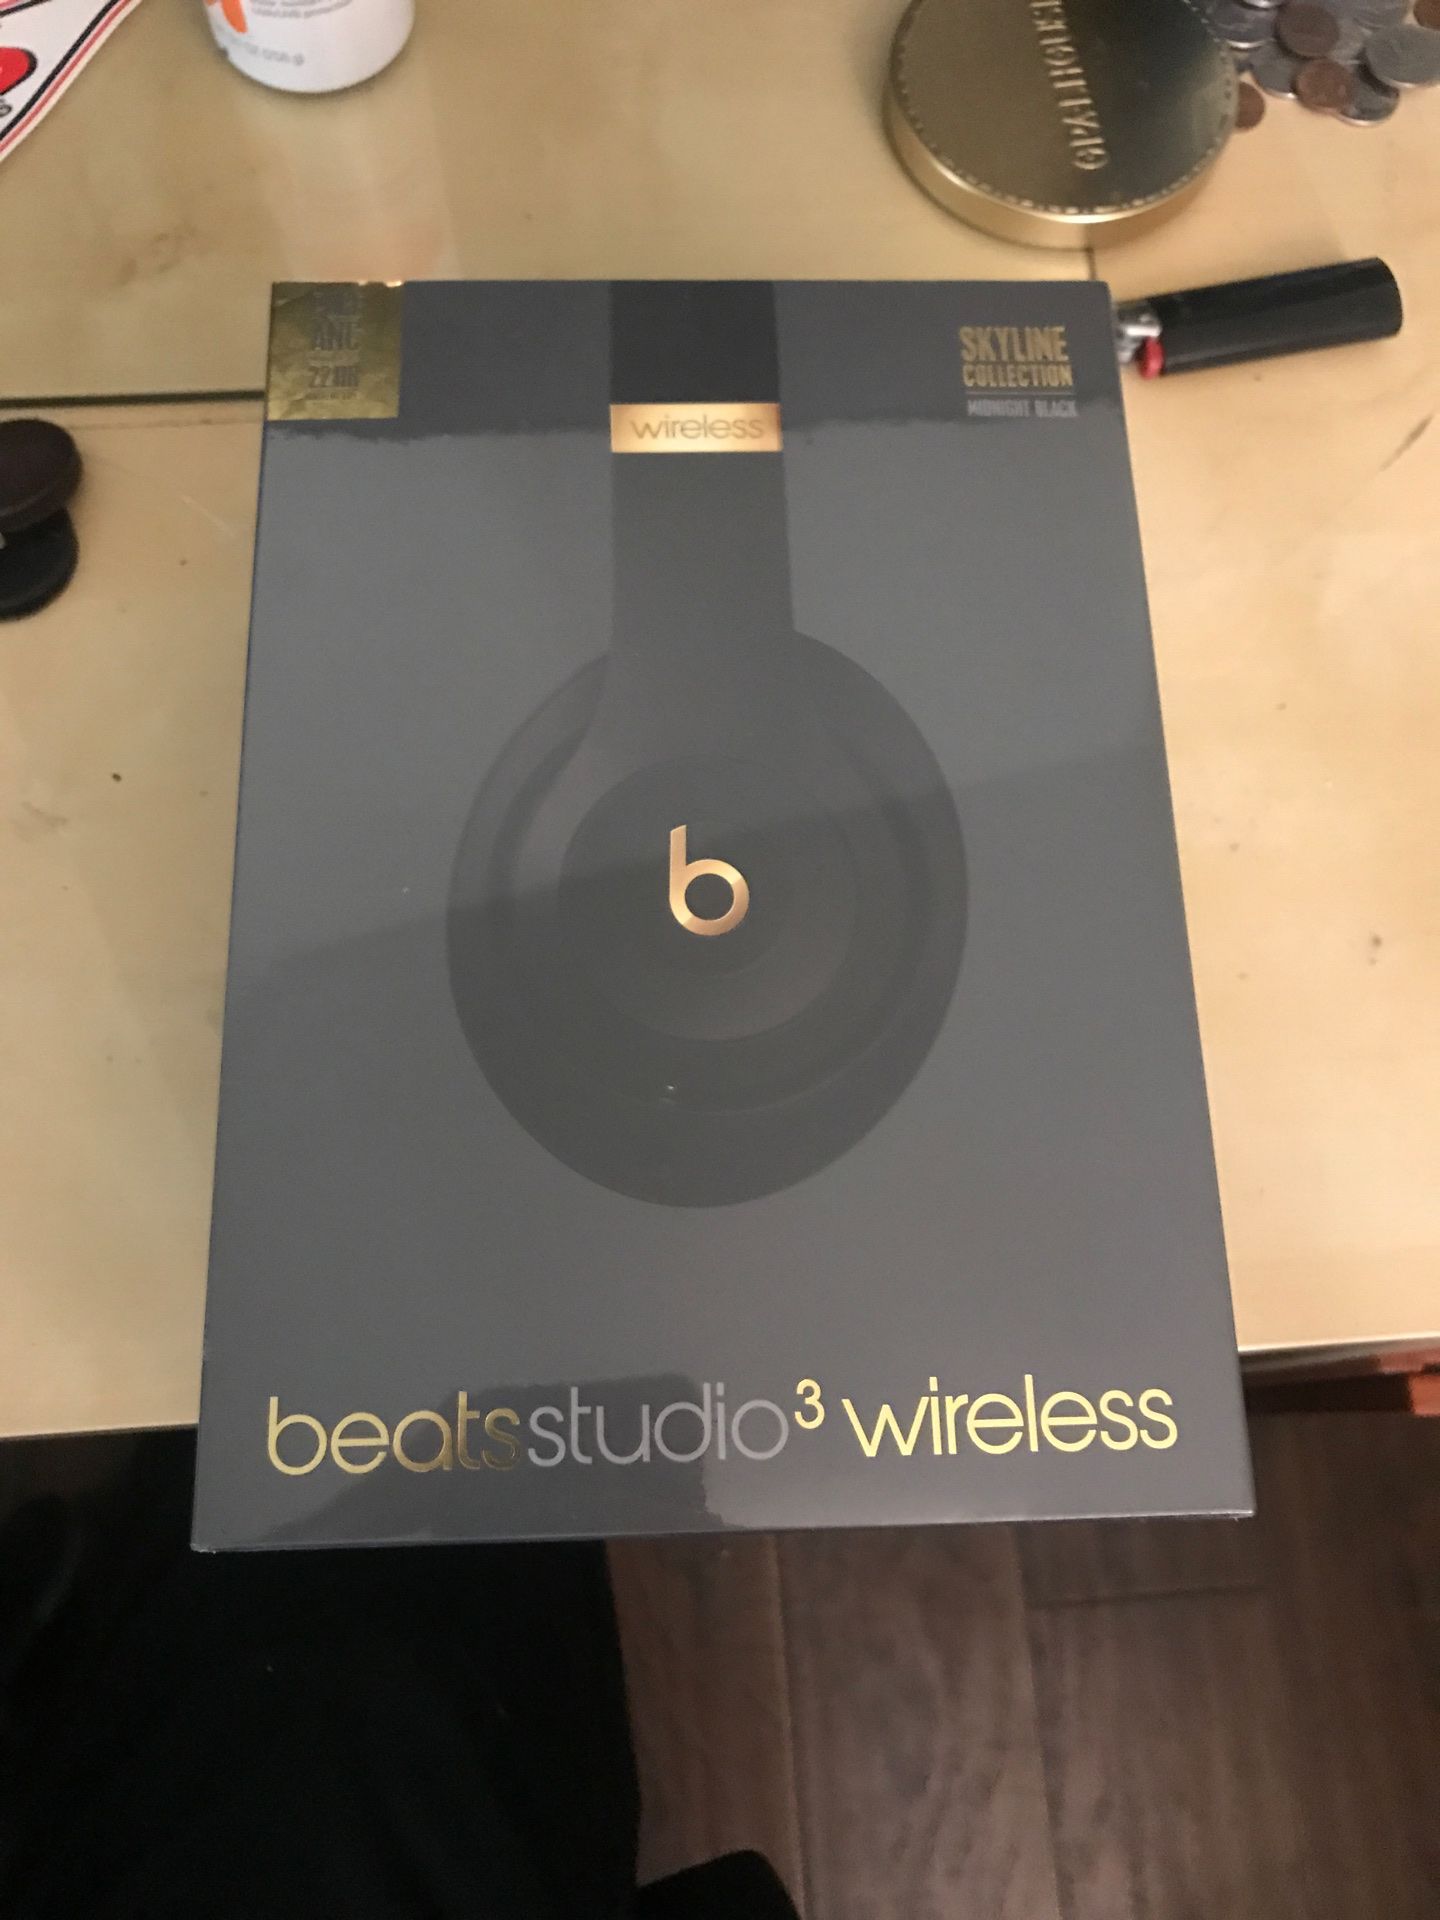 Beats studio 3 wireless never opened $150